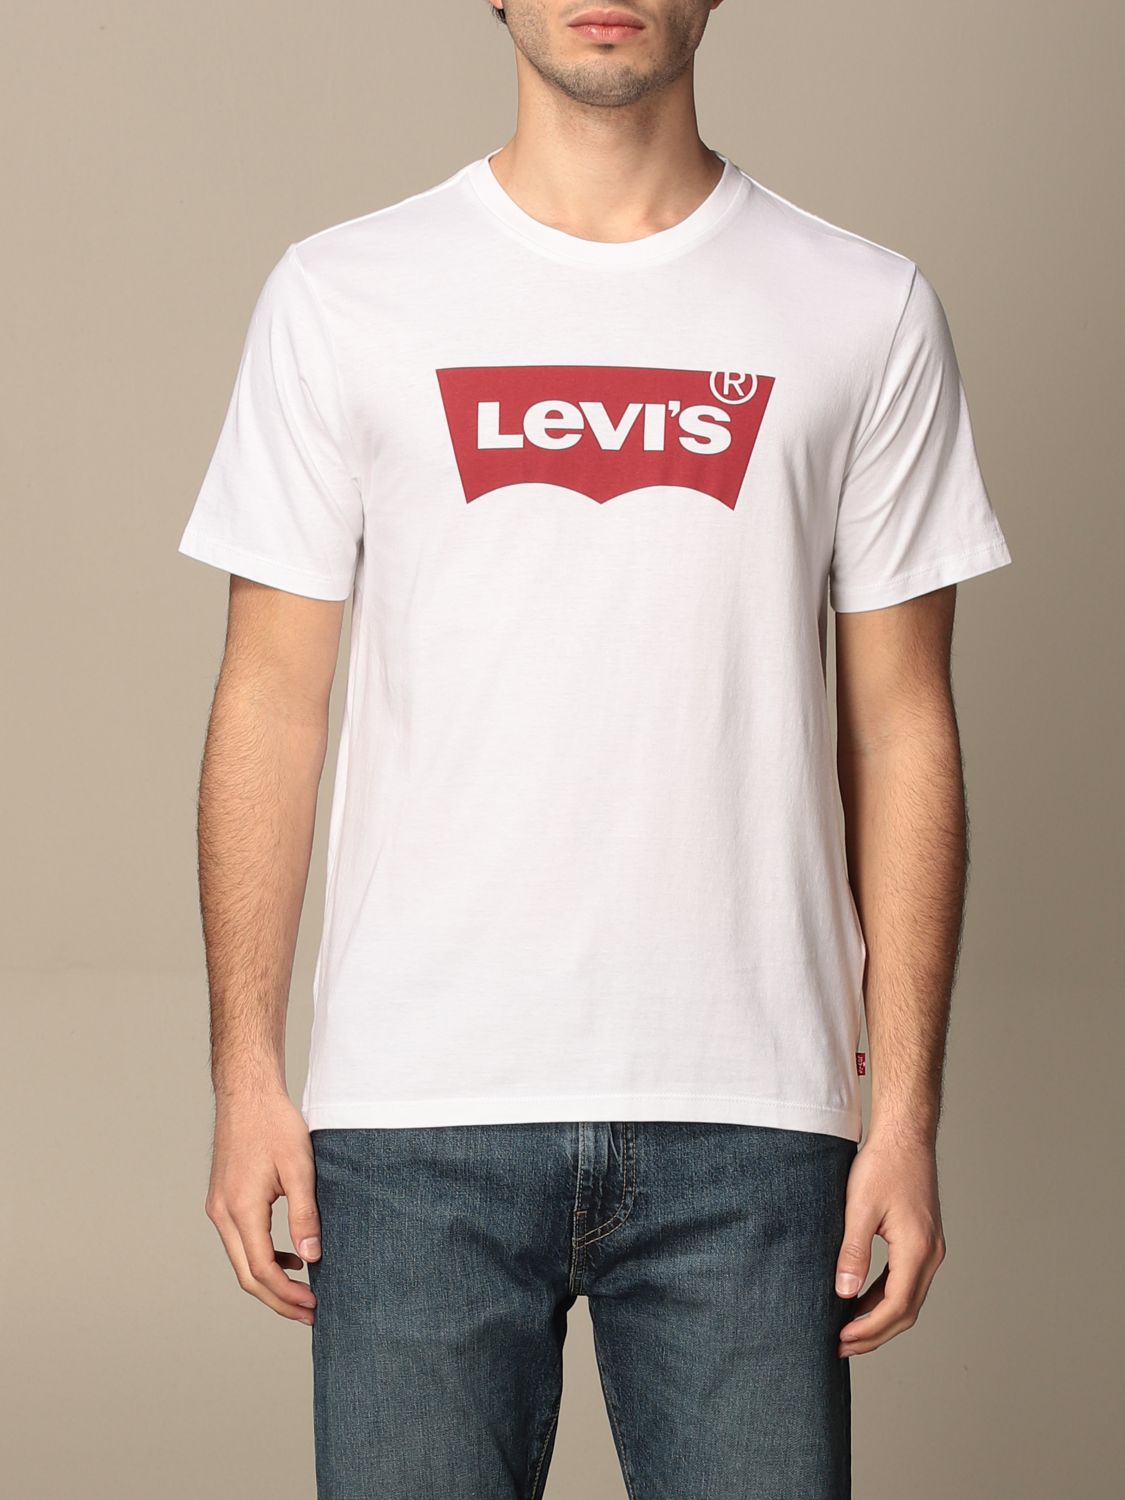 Купить футболку levis. White Levis t Shirt. Футболка левайс мужская. Levis logo футболка. Levis man футболка.